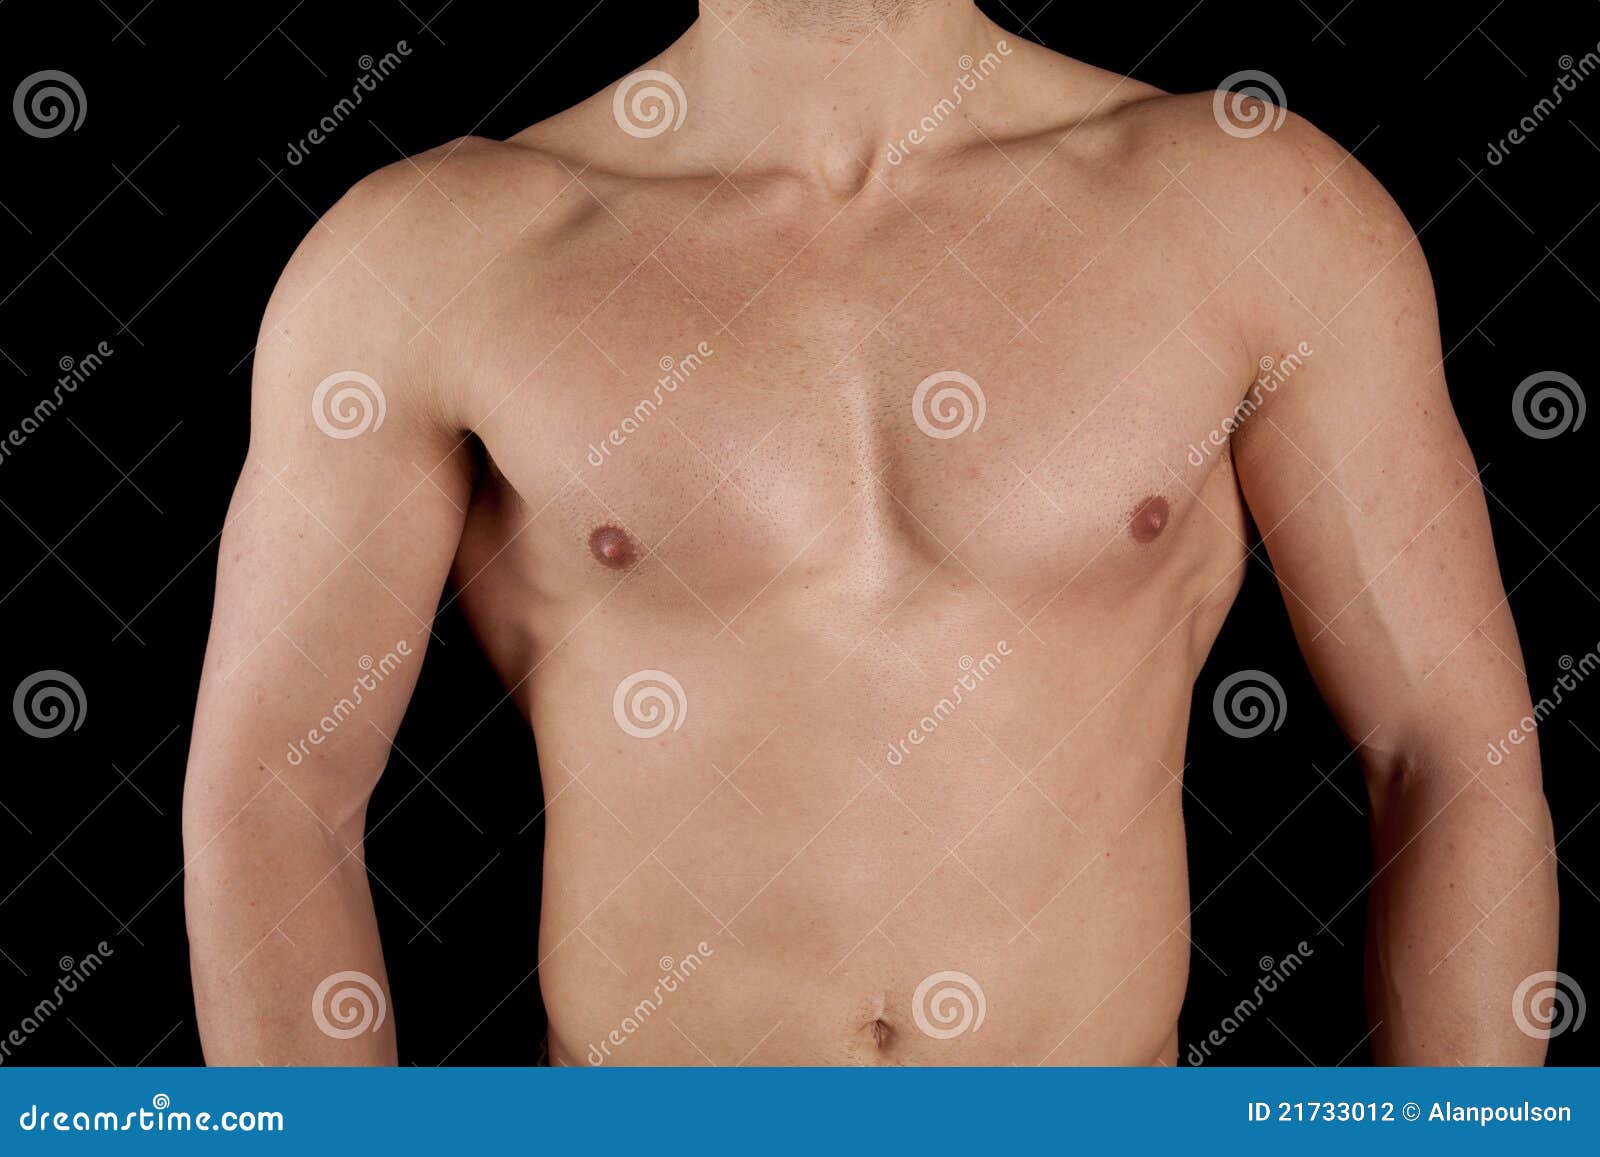 шишка в районе груди у мужчин фото 41